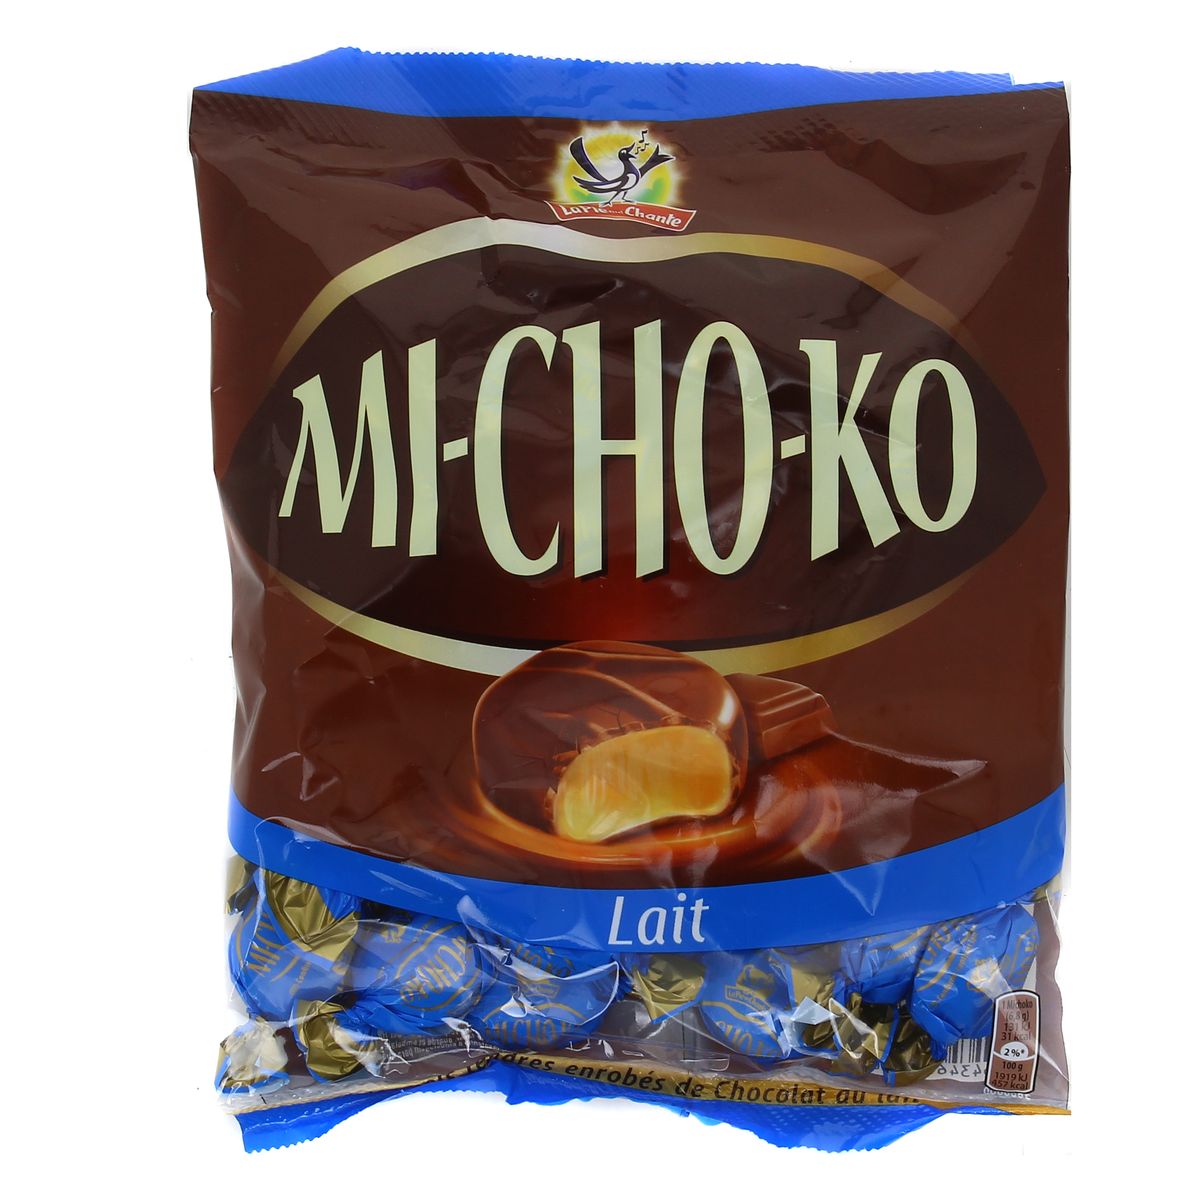 Michoko Caramel Candies From France, 100 gr 3.5 oz bag, Twelve